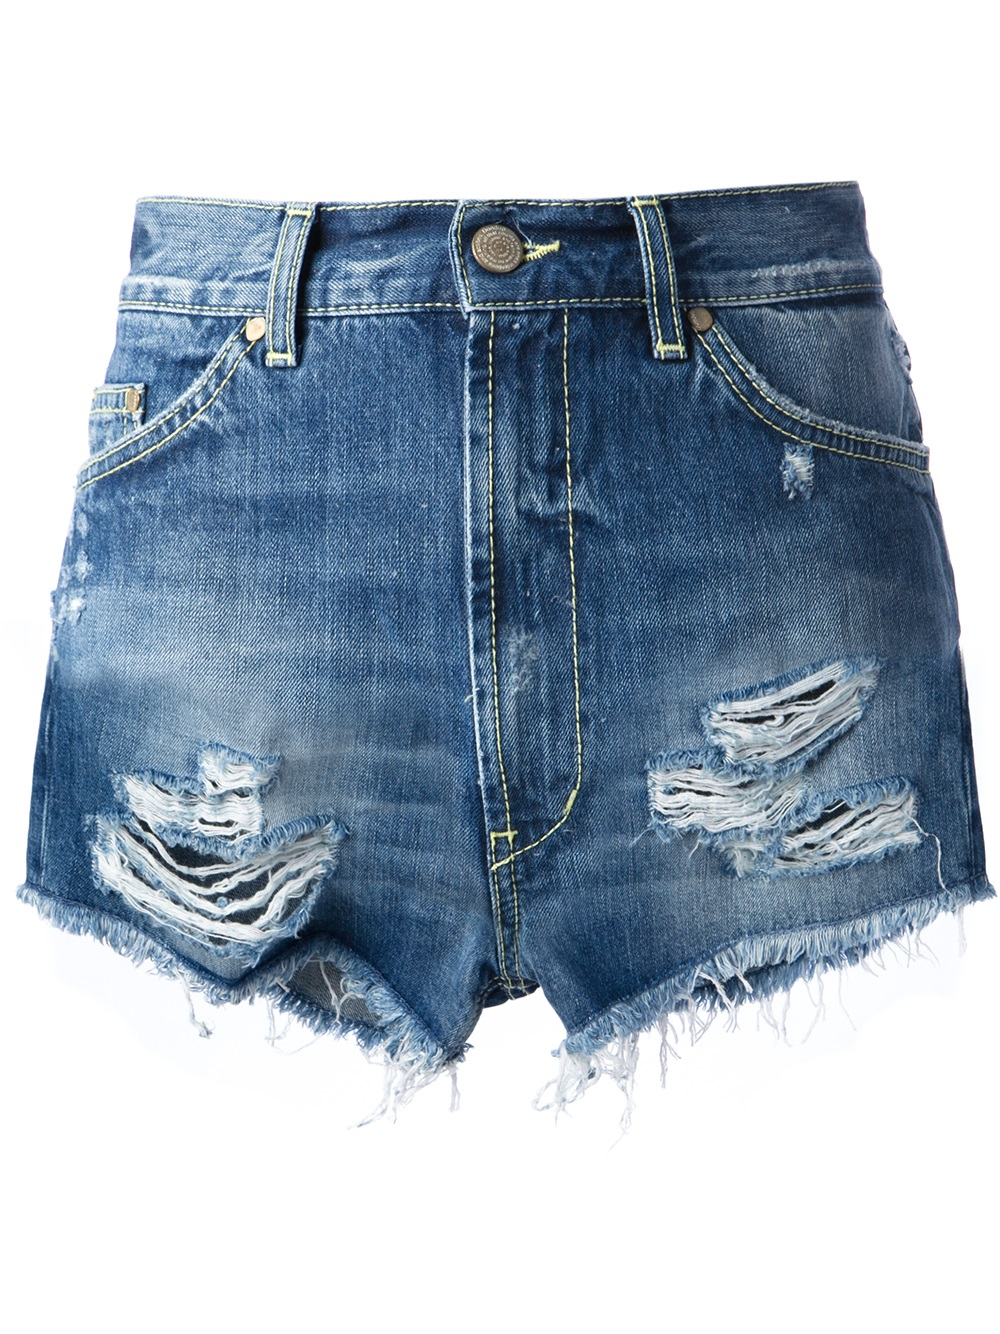 Dondup Distressed Denim Shorts in Blue | Lyst